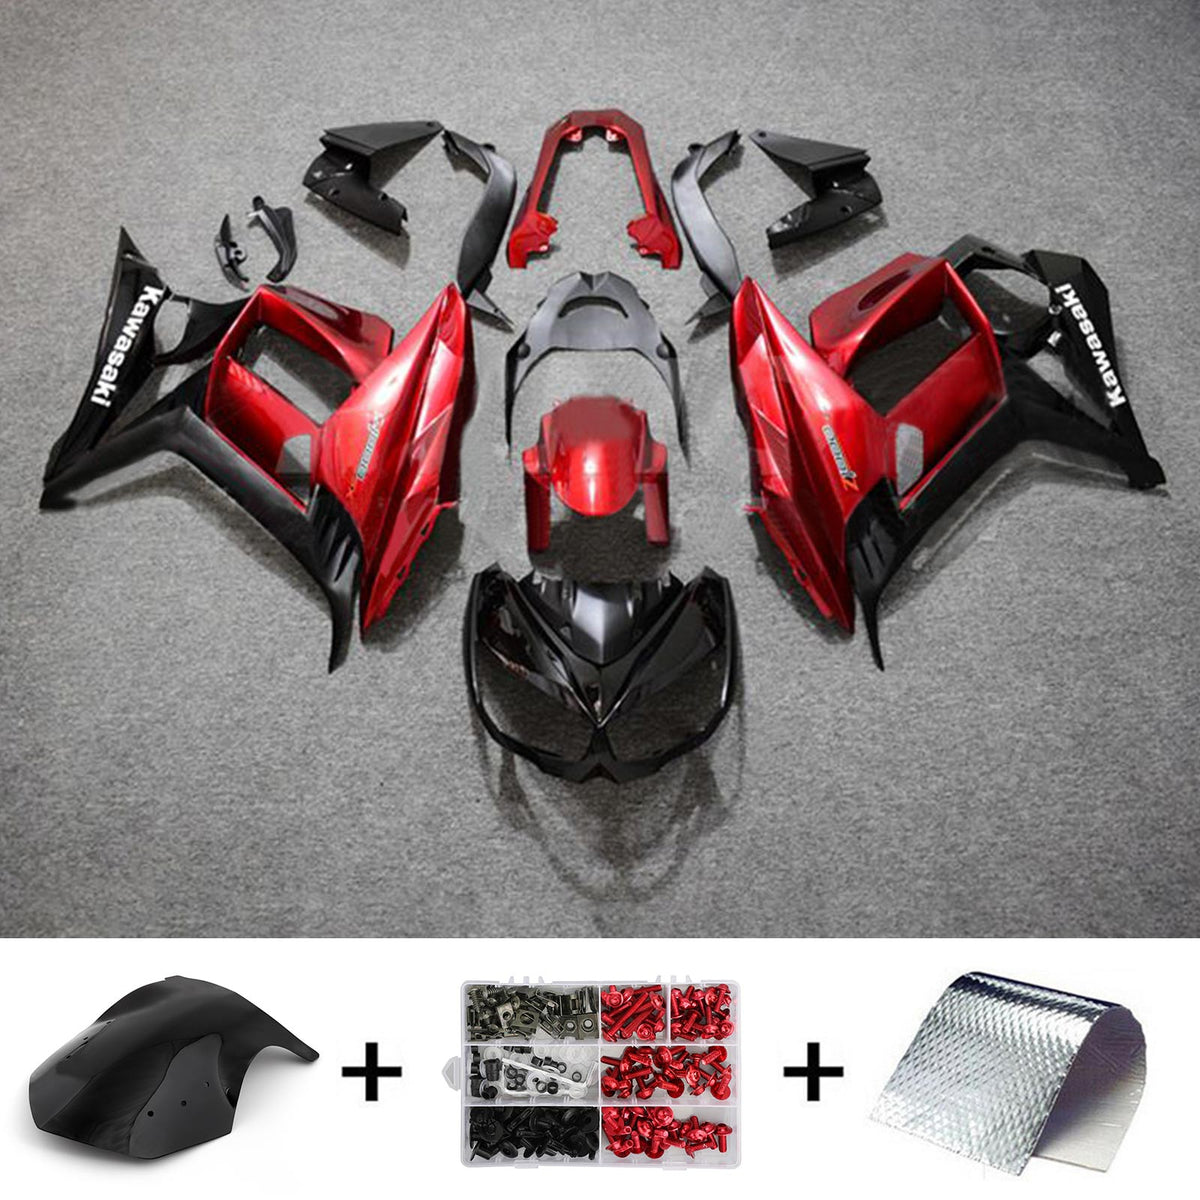 Amotopart 2010-2015 Z1000SX Kawasaki Red&Black Fairing Kit